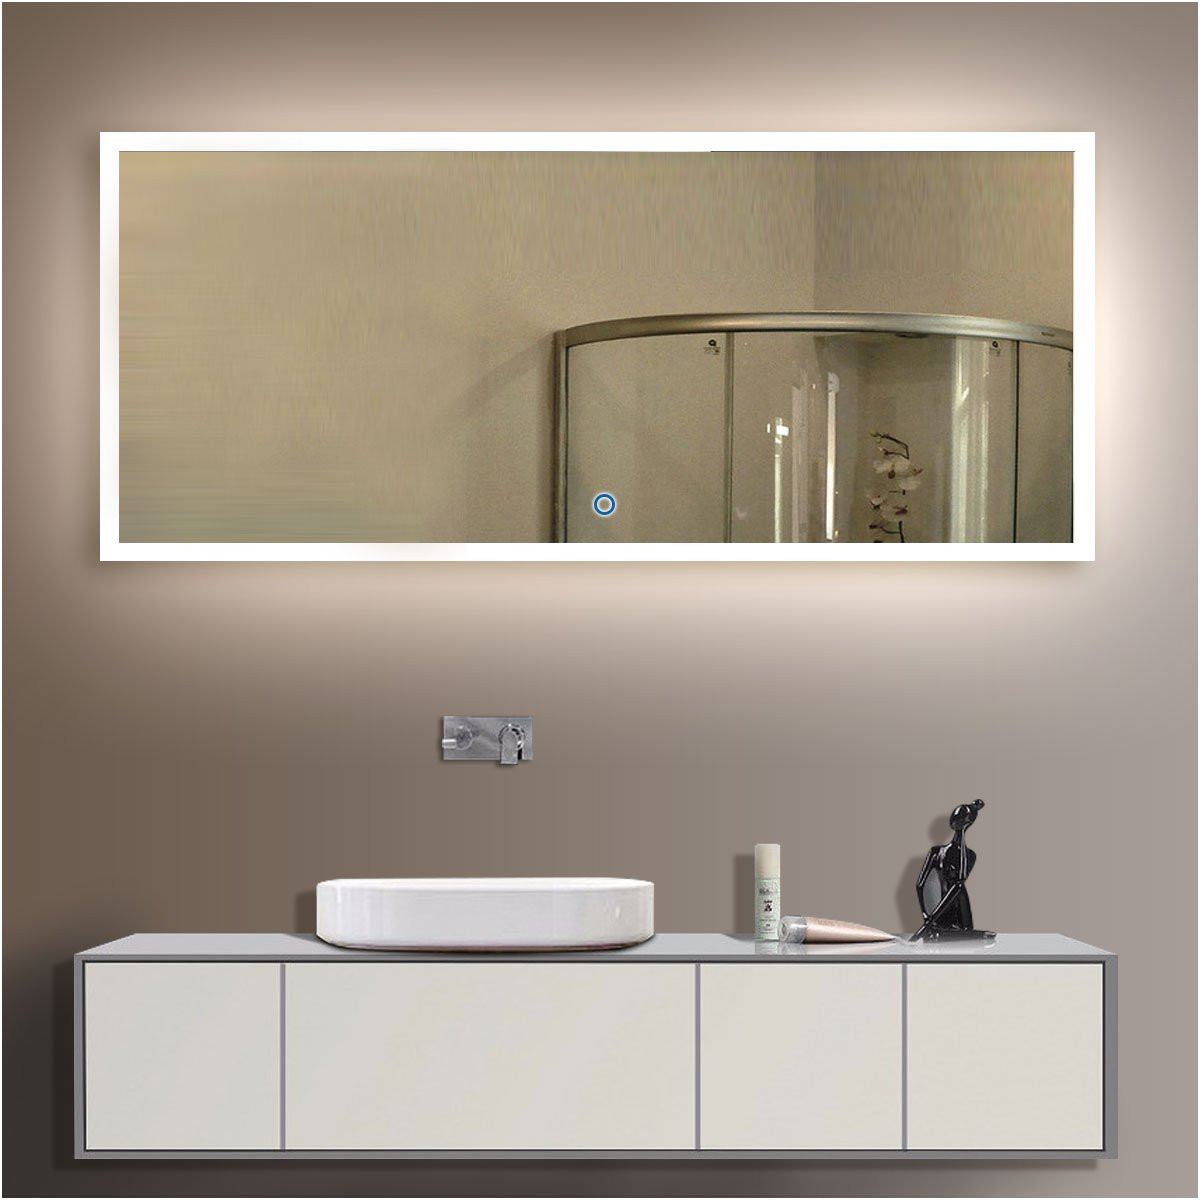 New Illuminated Bathroom Mirrors with Bluetooth